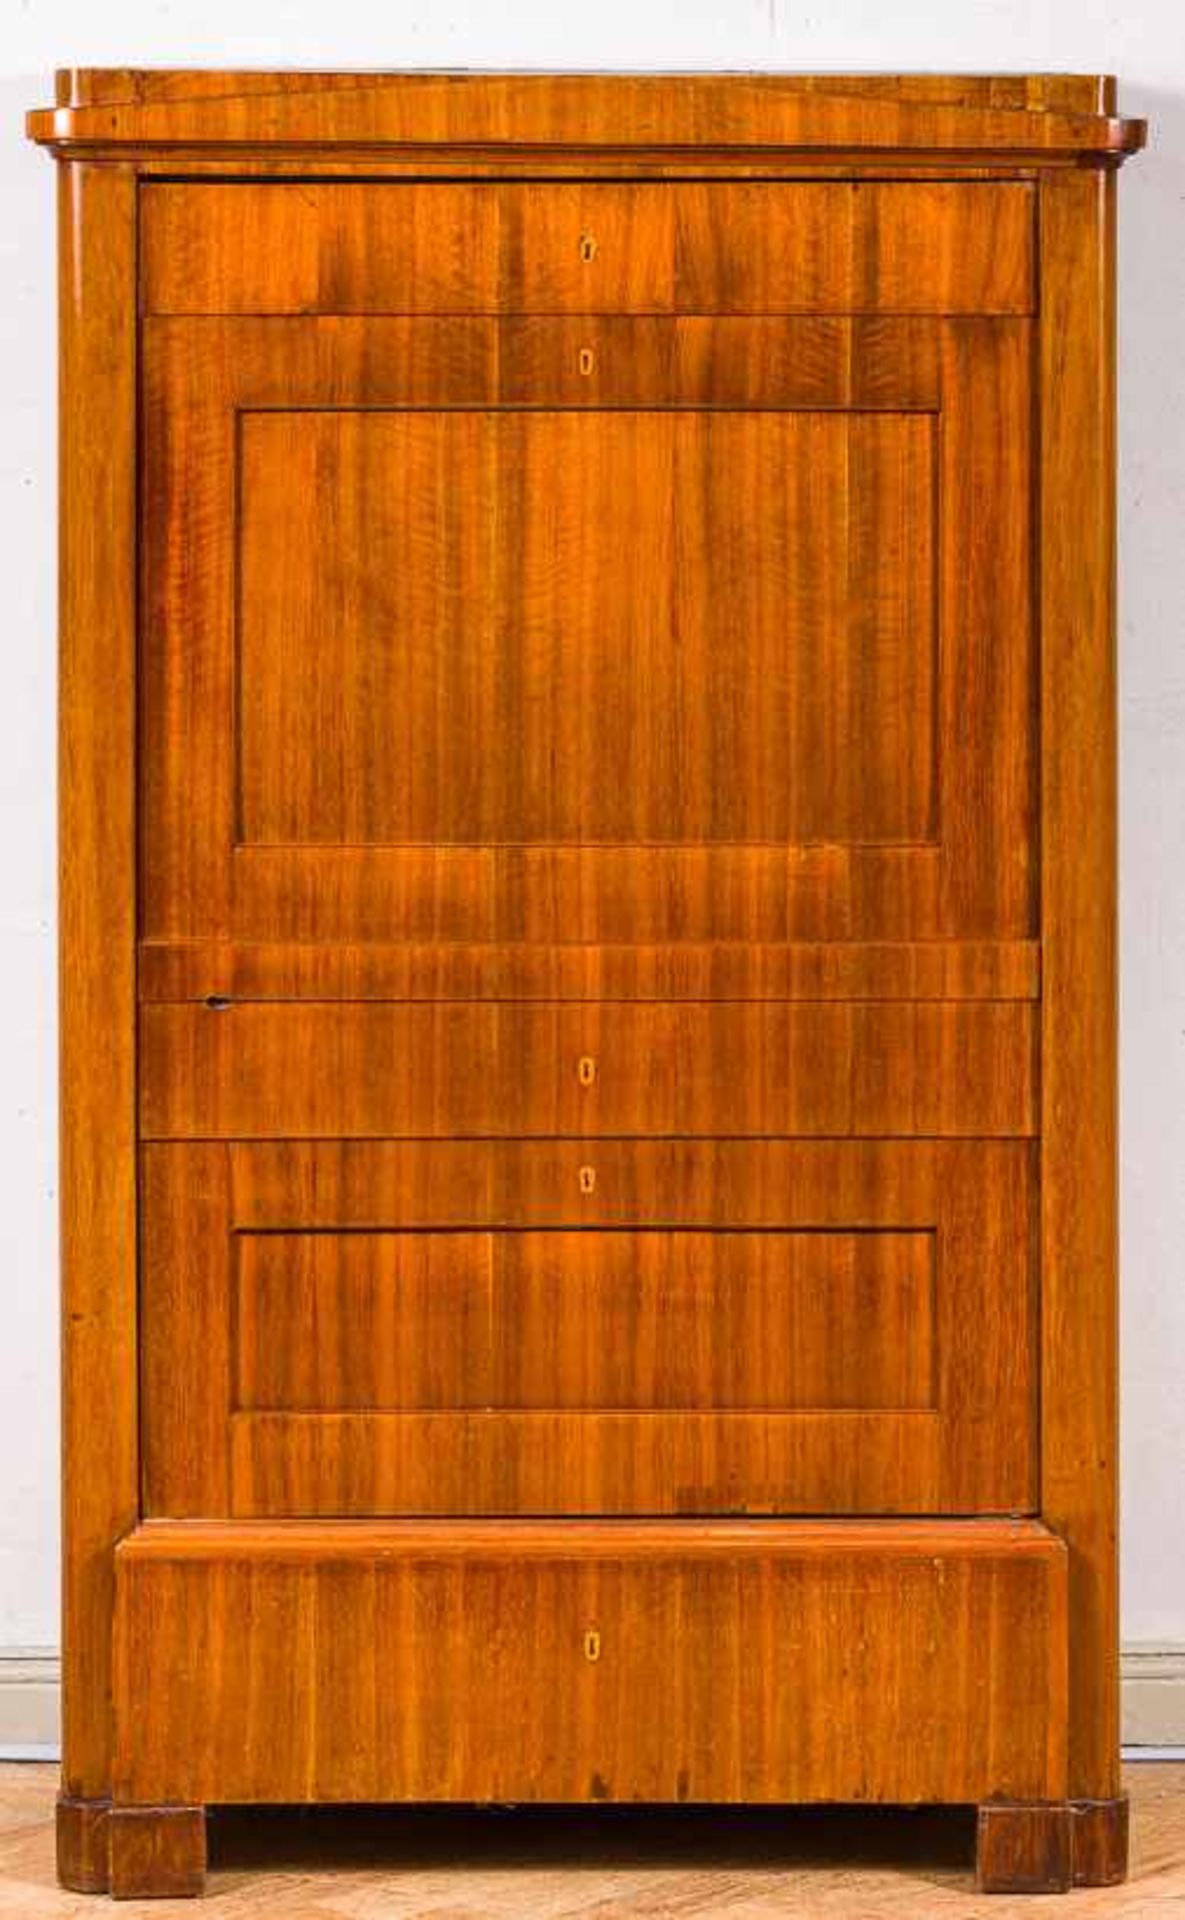 Biedermeier-Schrank in Form eines Sekretärs19. Jh.Mahagoni, hell gebeizt. Eintüriger, rechteckiger